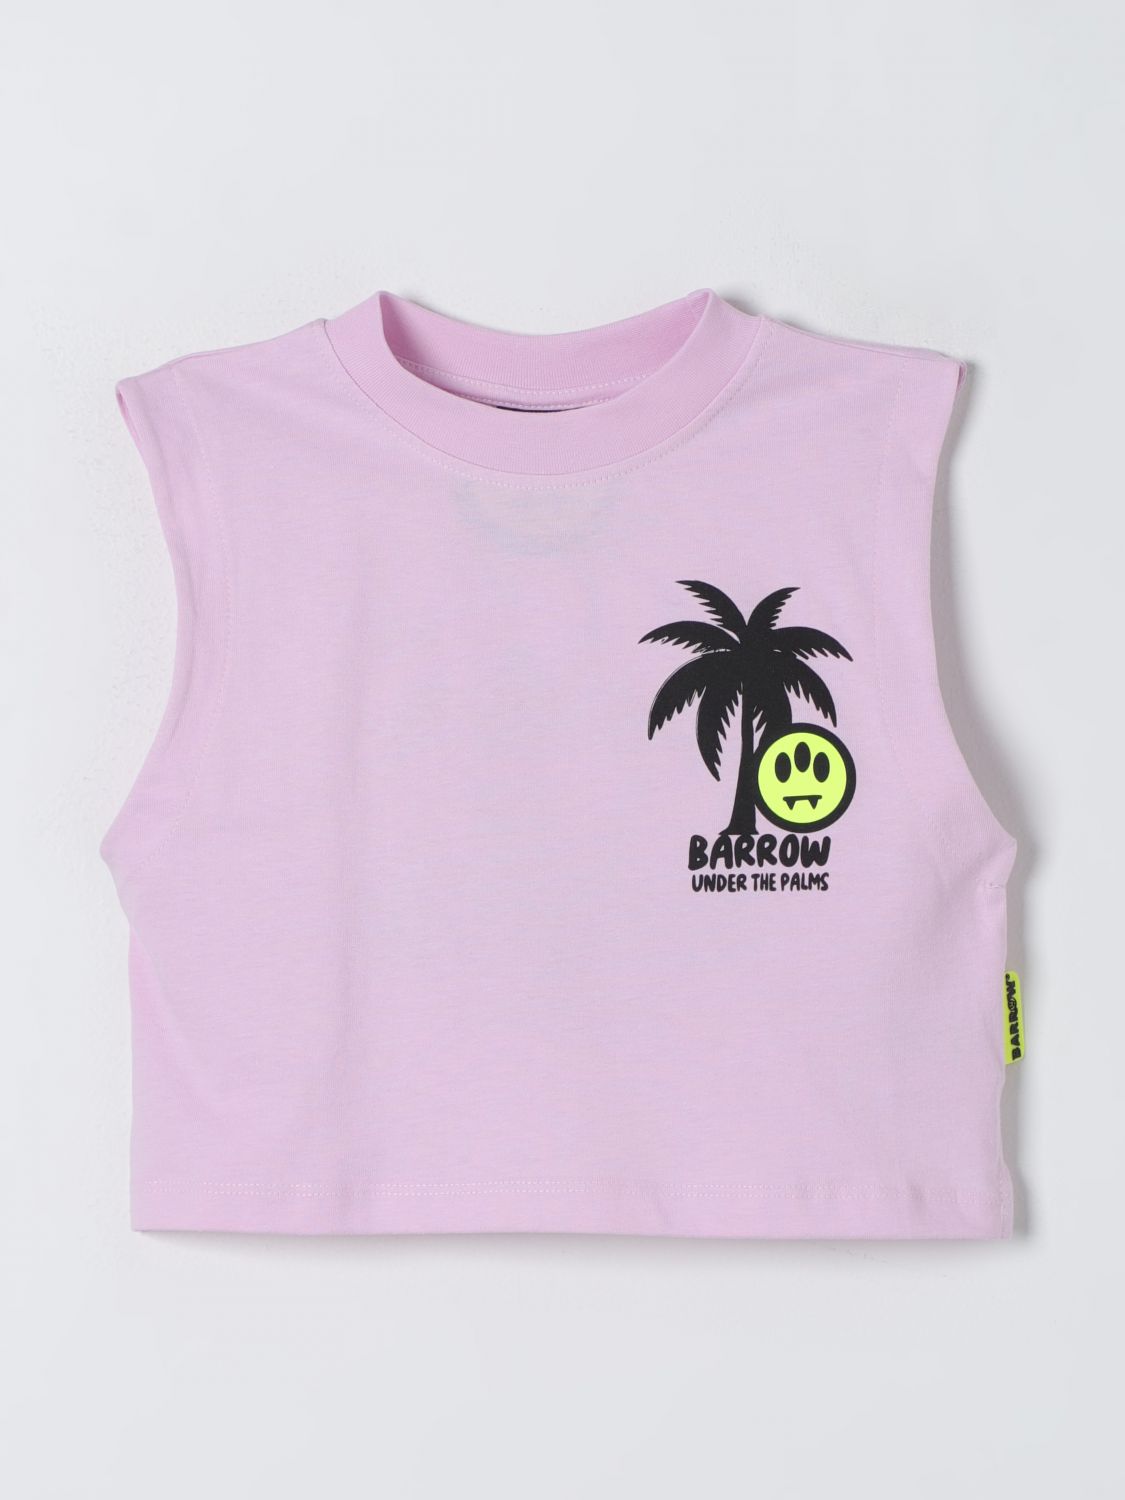 Barrow Kids T-Shirt BARROW KIDS Kids colour Pink